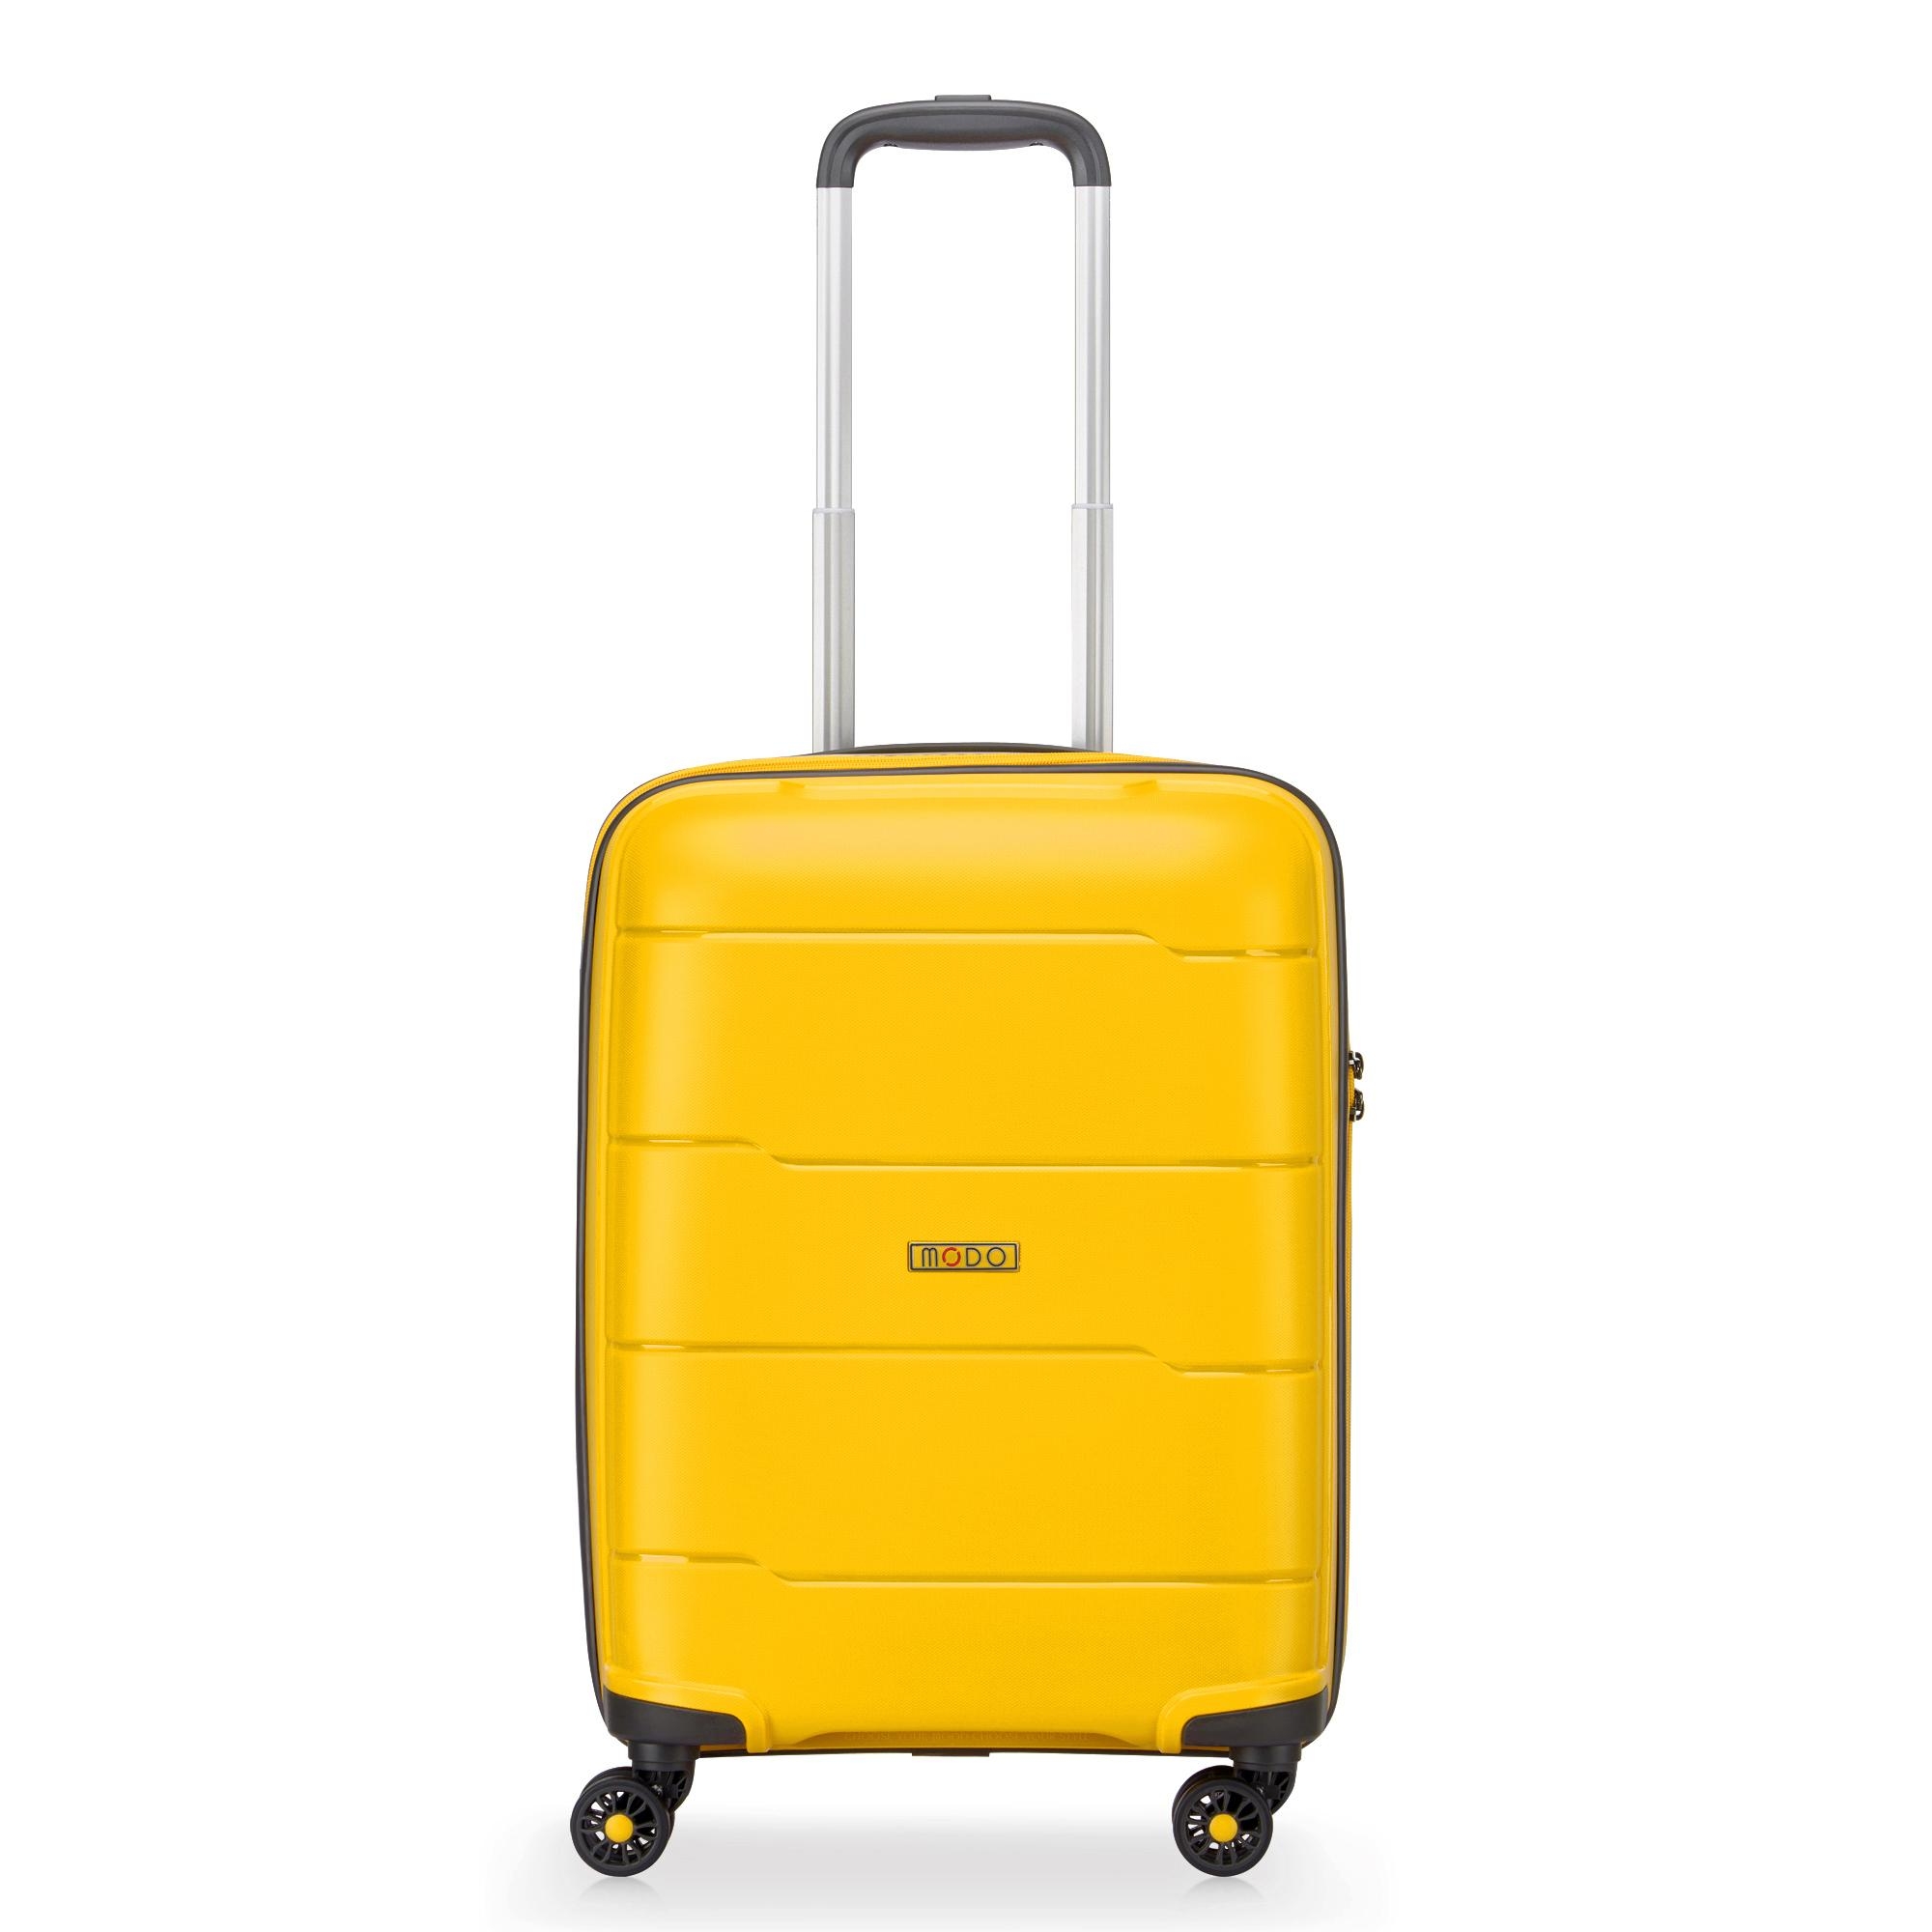 Vali Modo by Roncato Galaxy size S (20 inch) - Yellow trọng lượng nhẹ